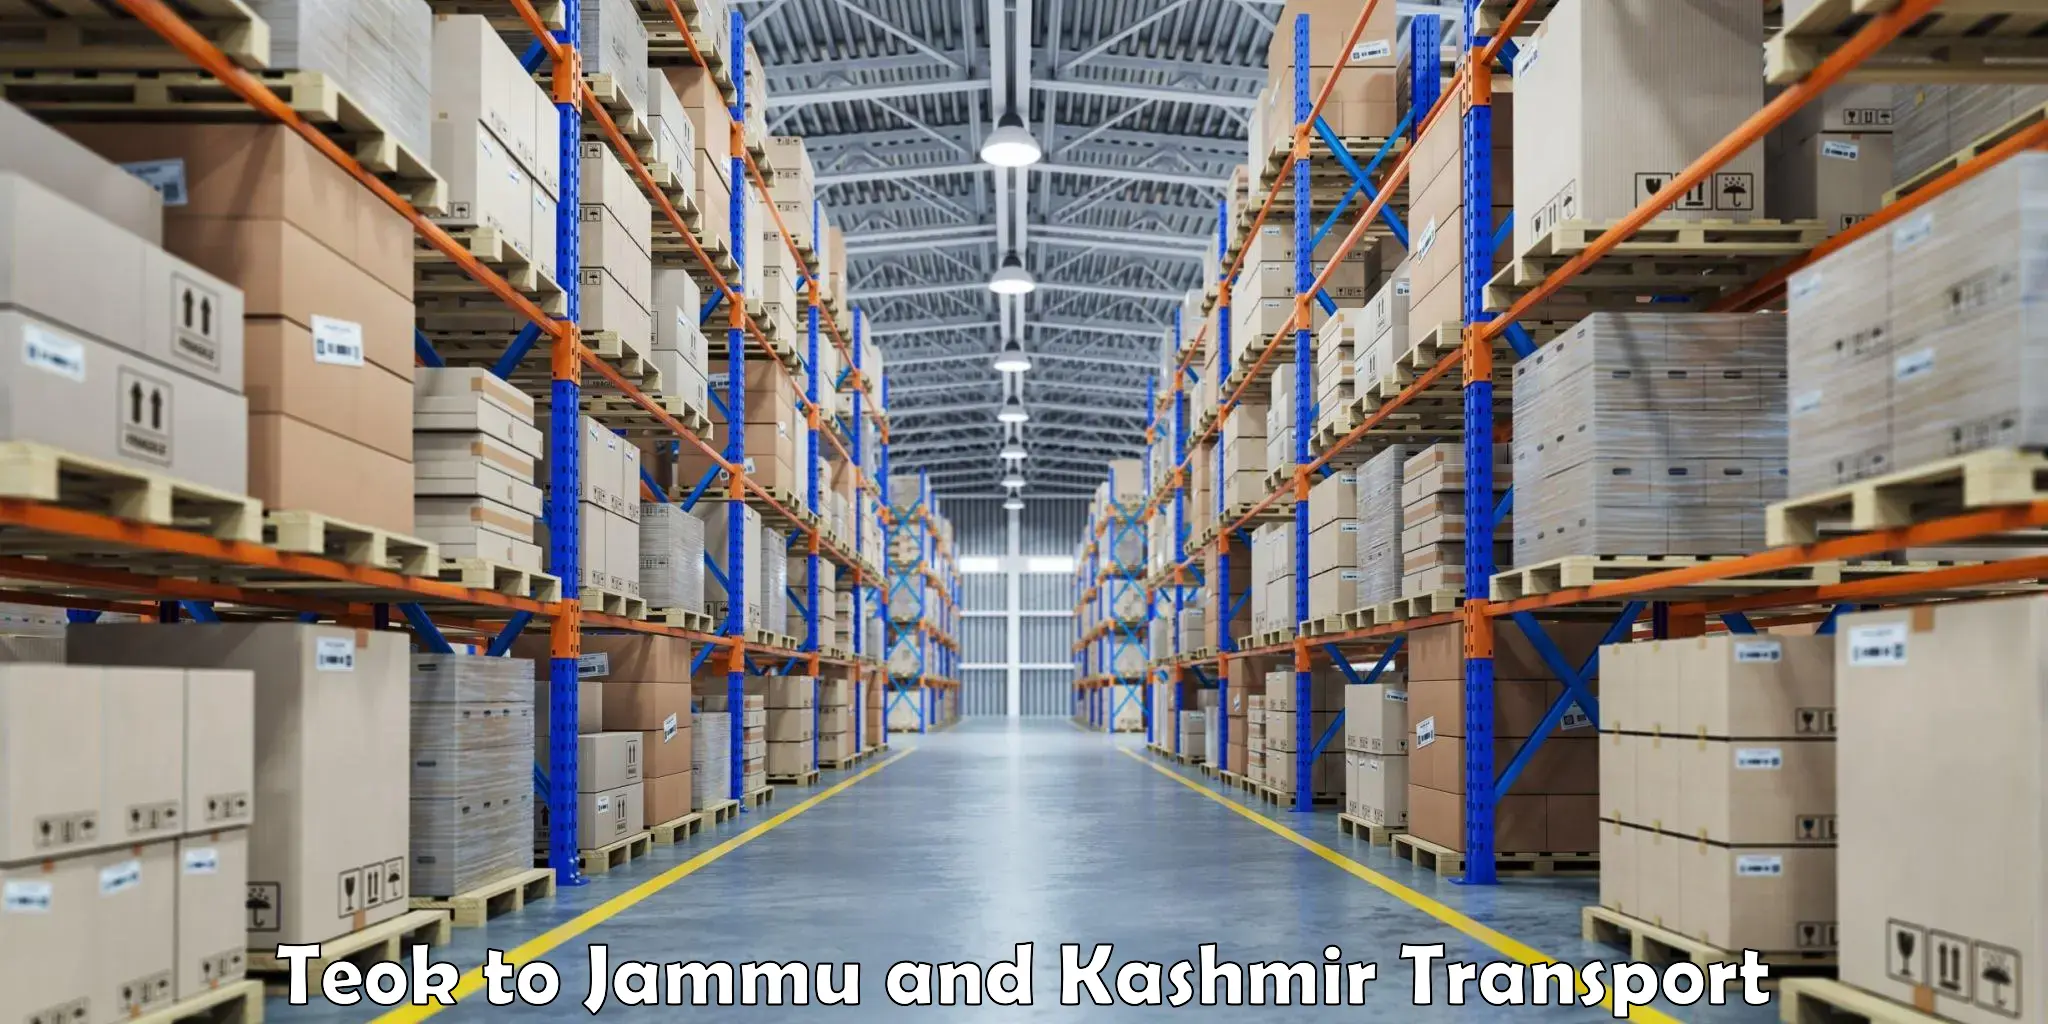 Truck transport companies in India Teok to Kargil